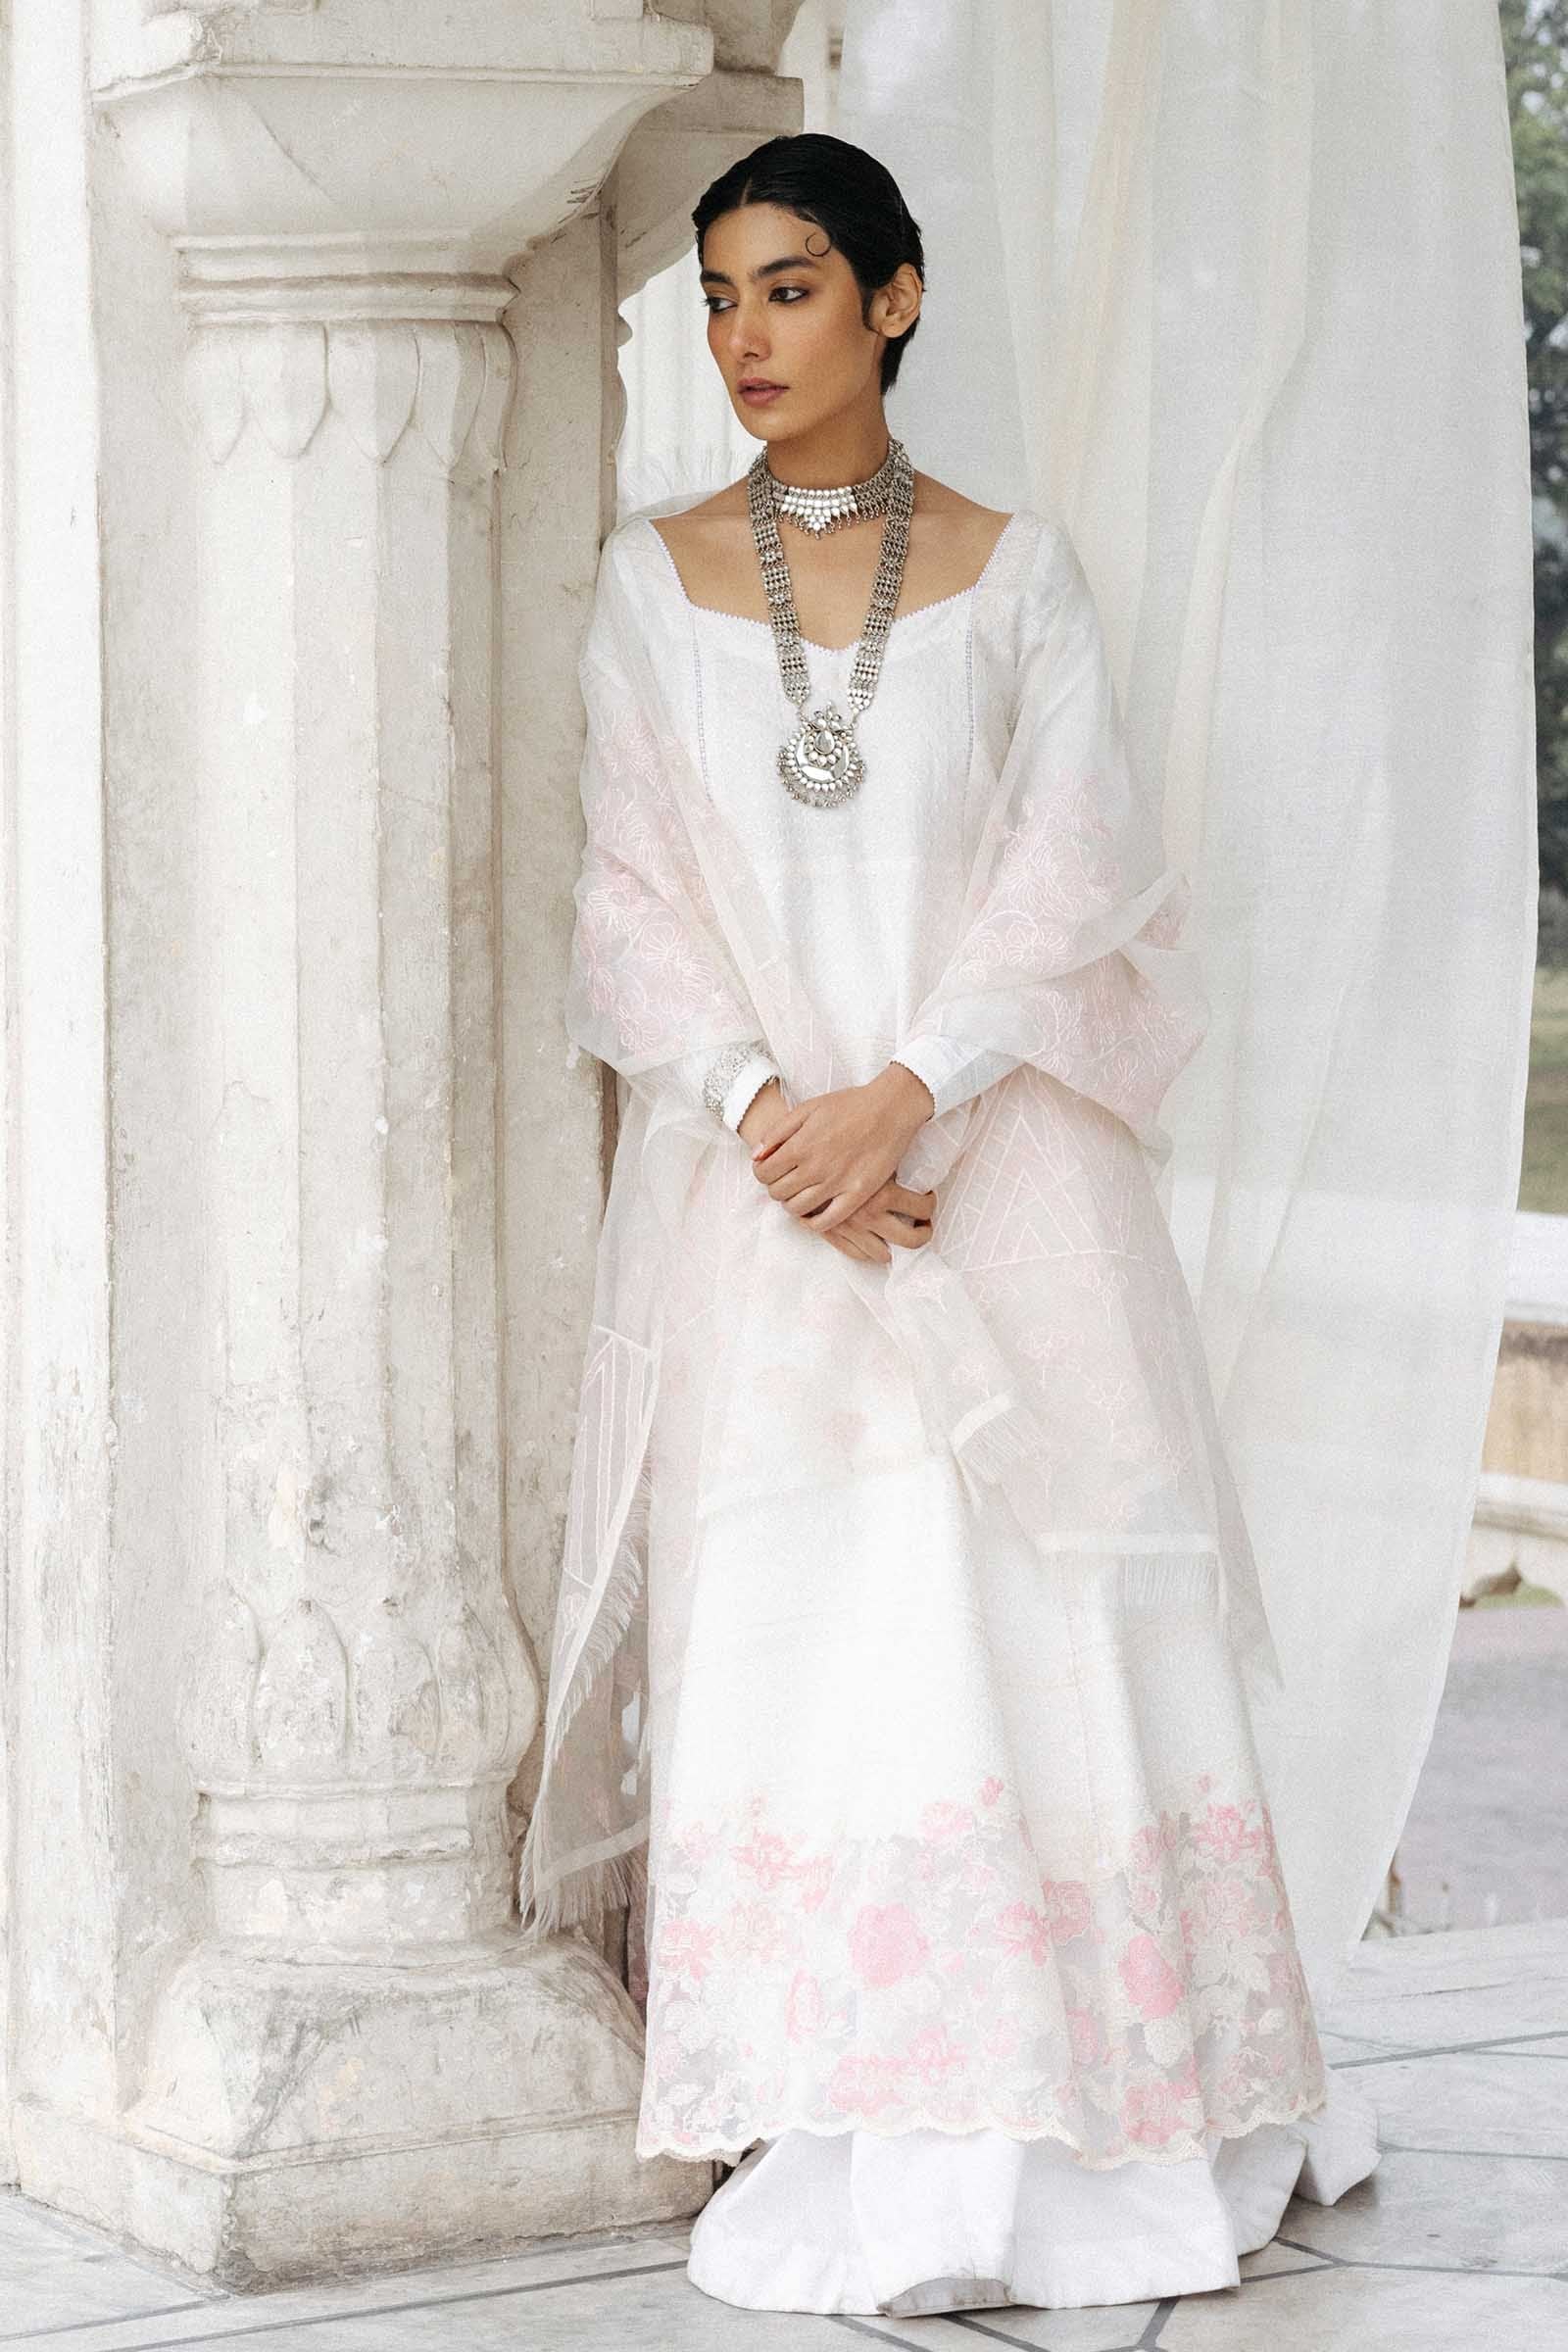 Zara sharjahan 2020 wedding dresses UK online